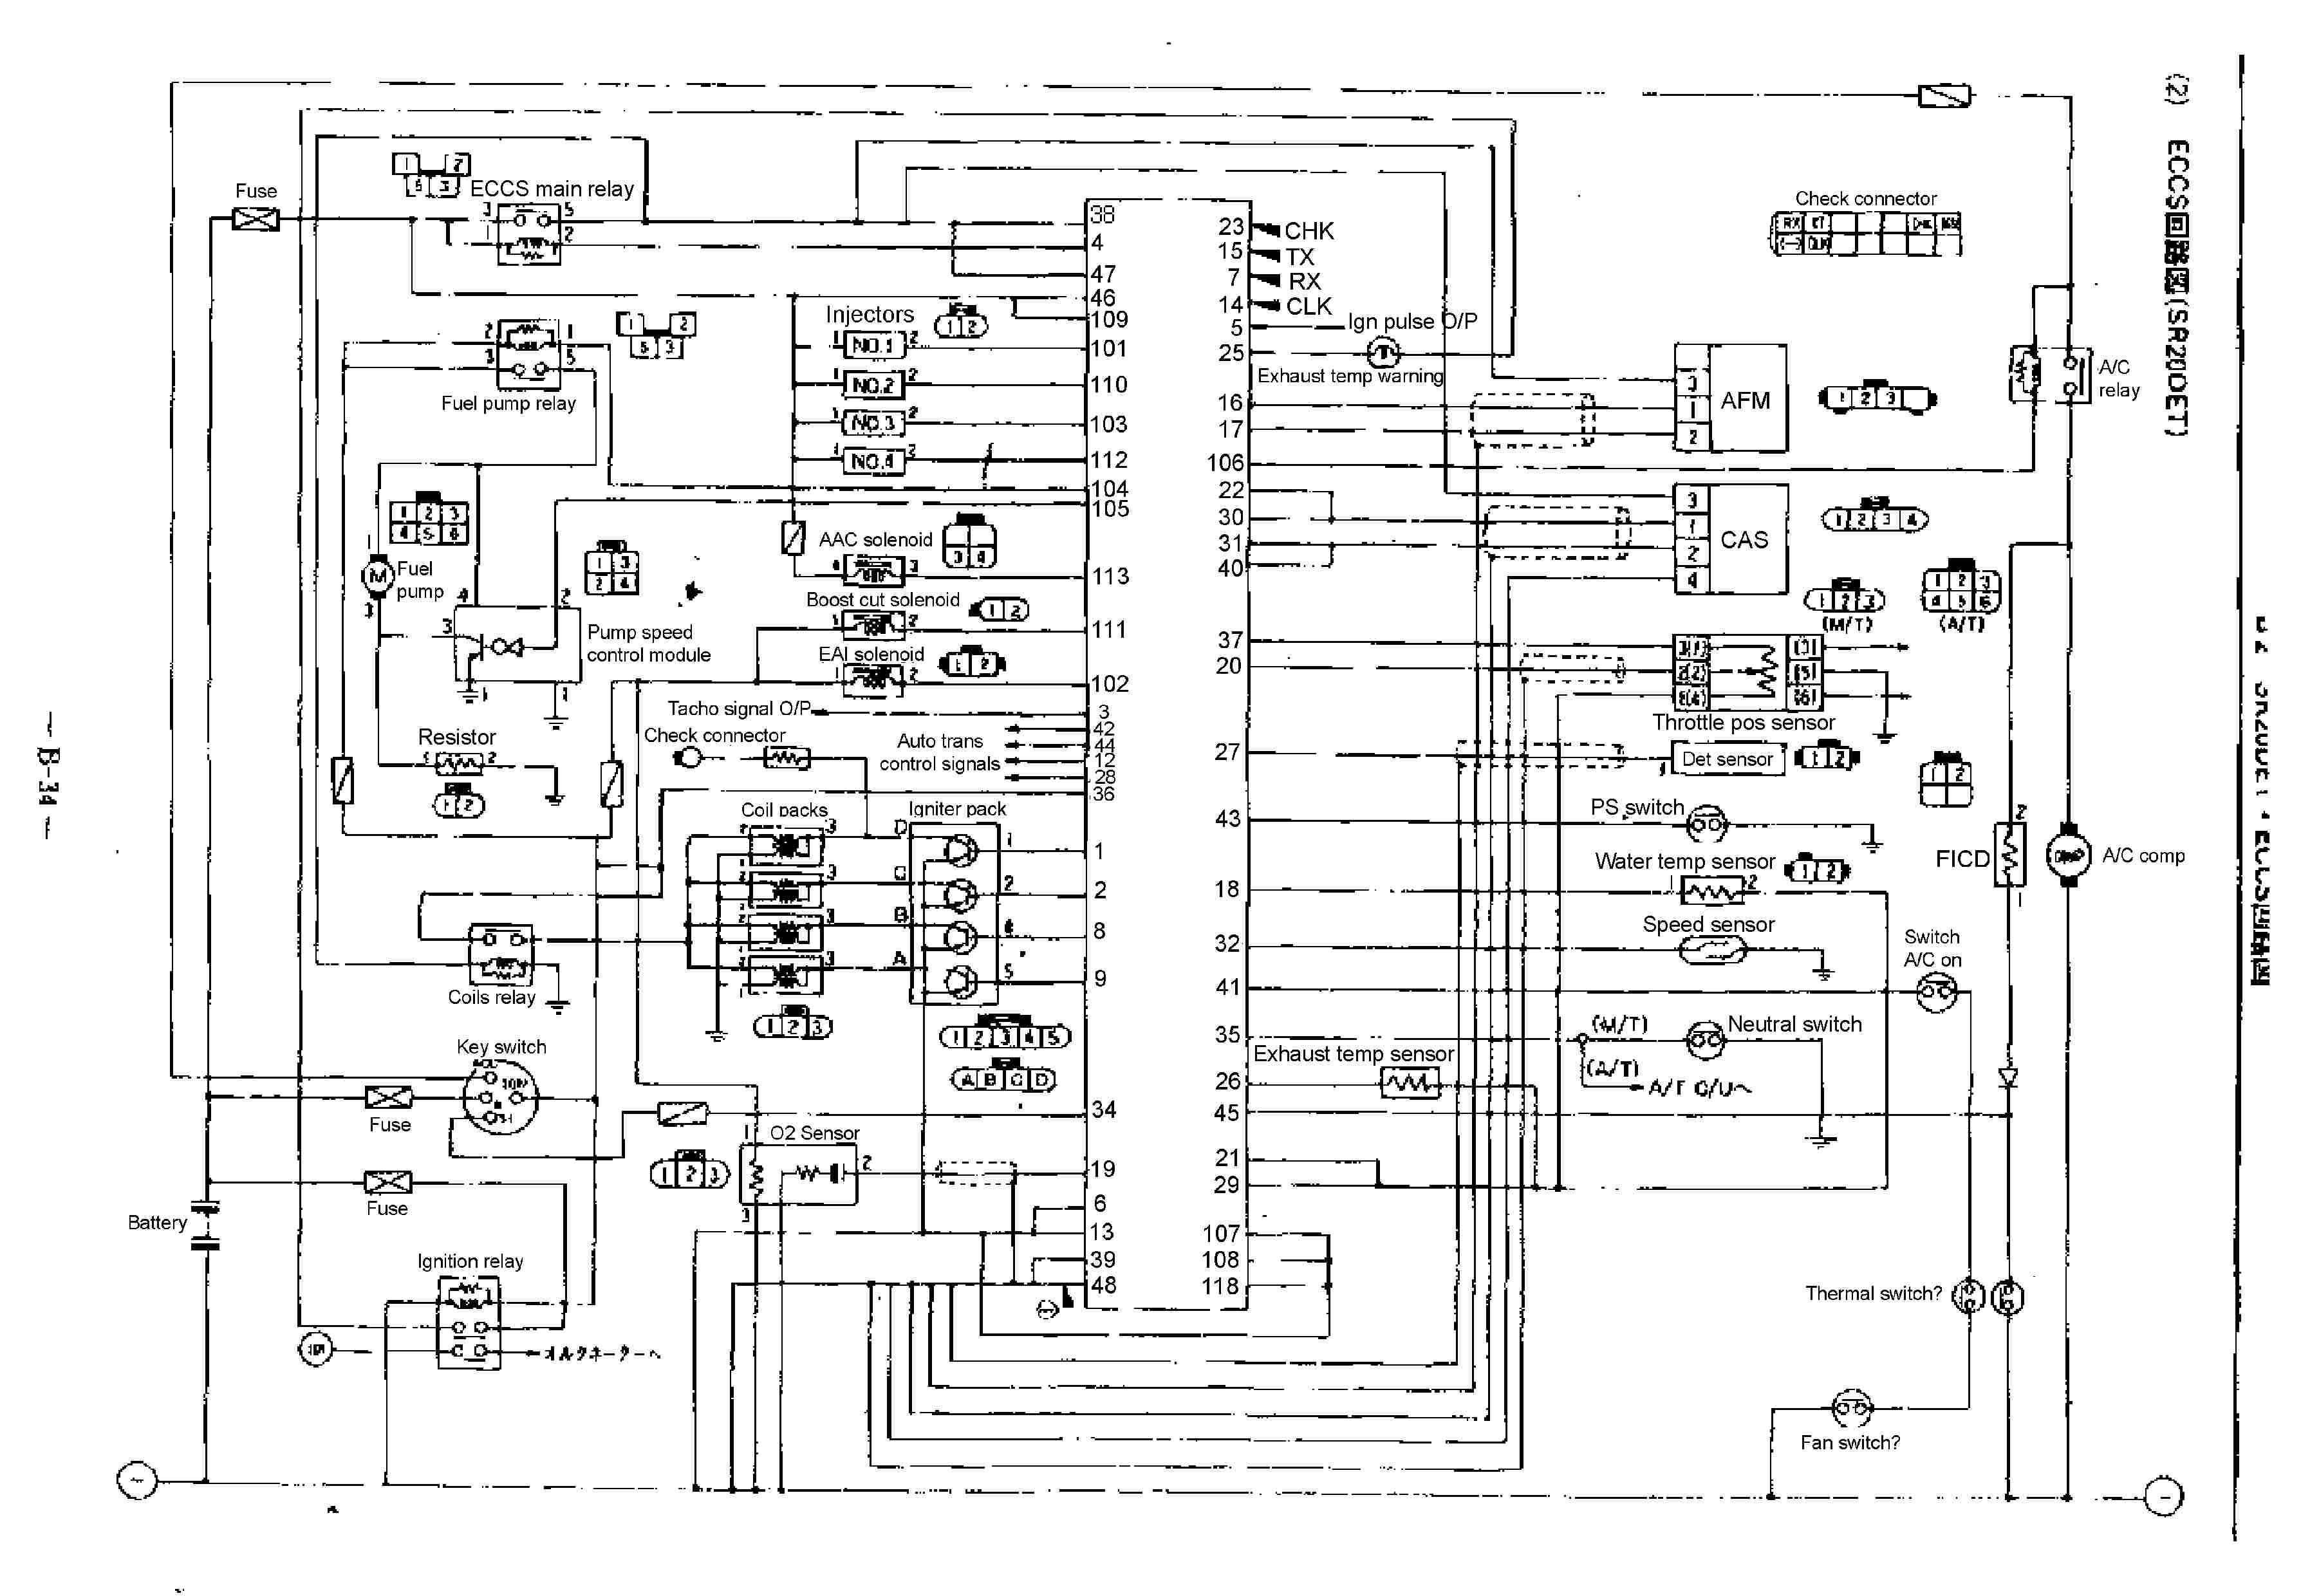 Car Transmission Diagram Electrical Wiring Diagrams Collision Body Repair Manual Nissan Note Of Car Transmission Diagram